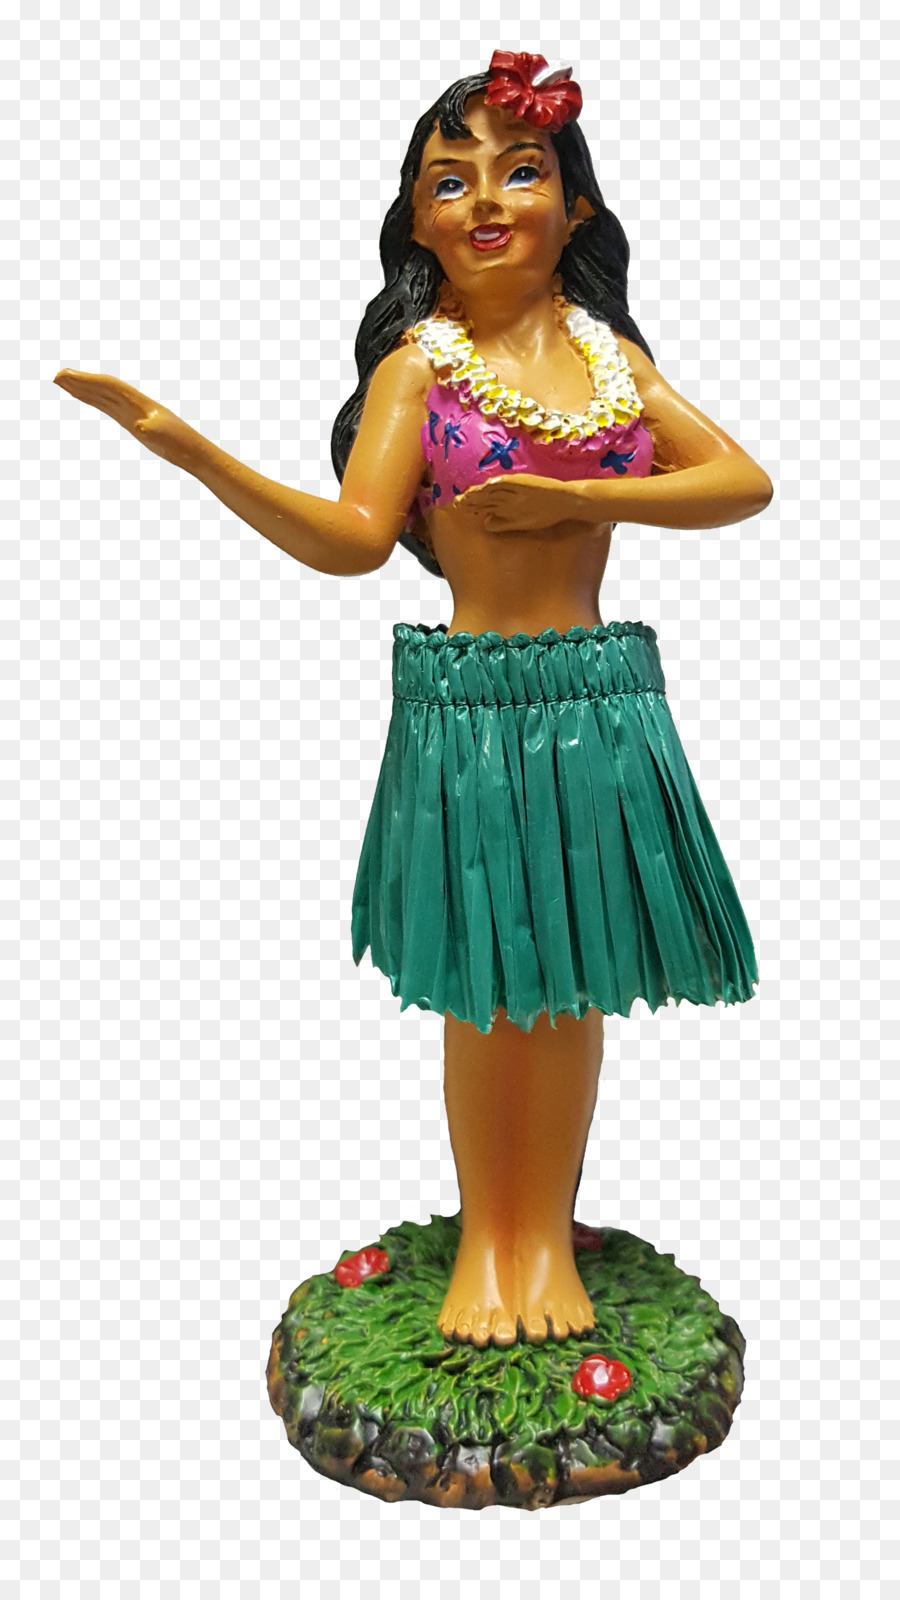 Hawaii Hula Girls Ukulele Doll - hawaiian png download - 1937*3409 - Free Transparent Hawaii png Download.